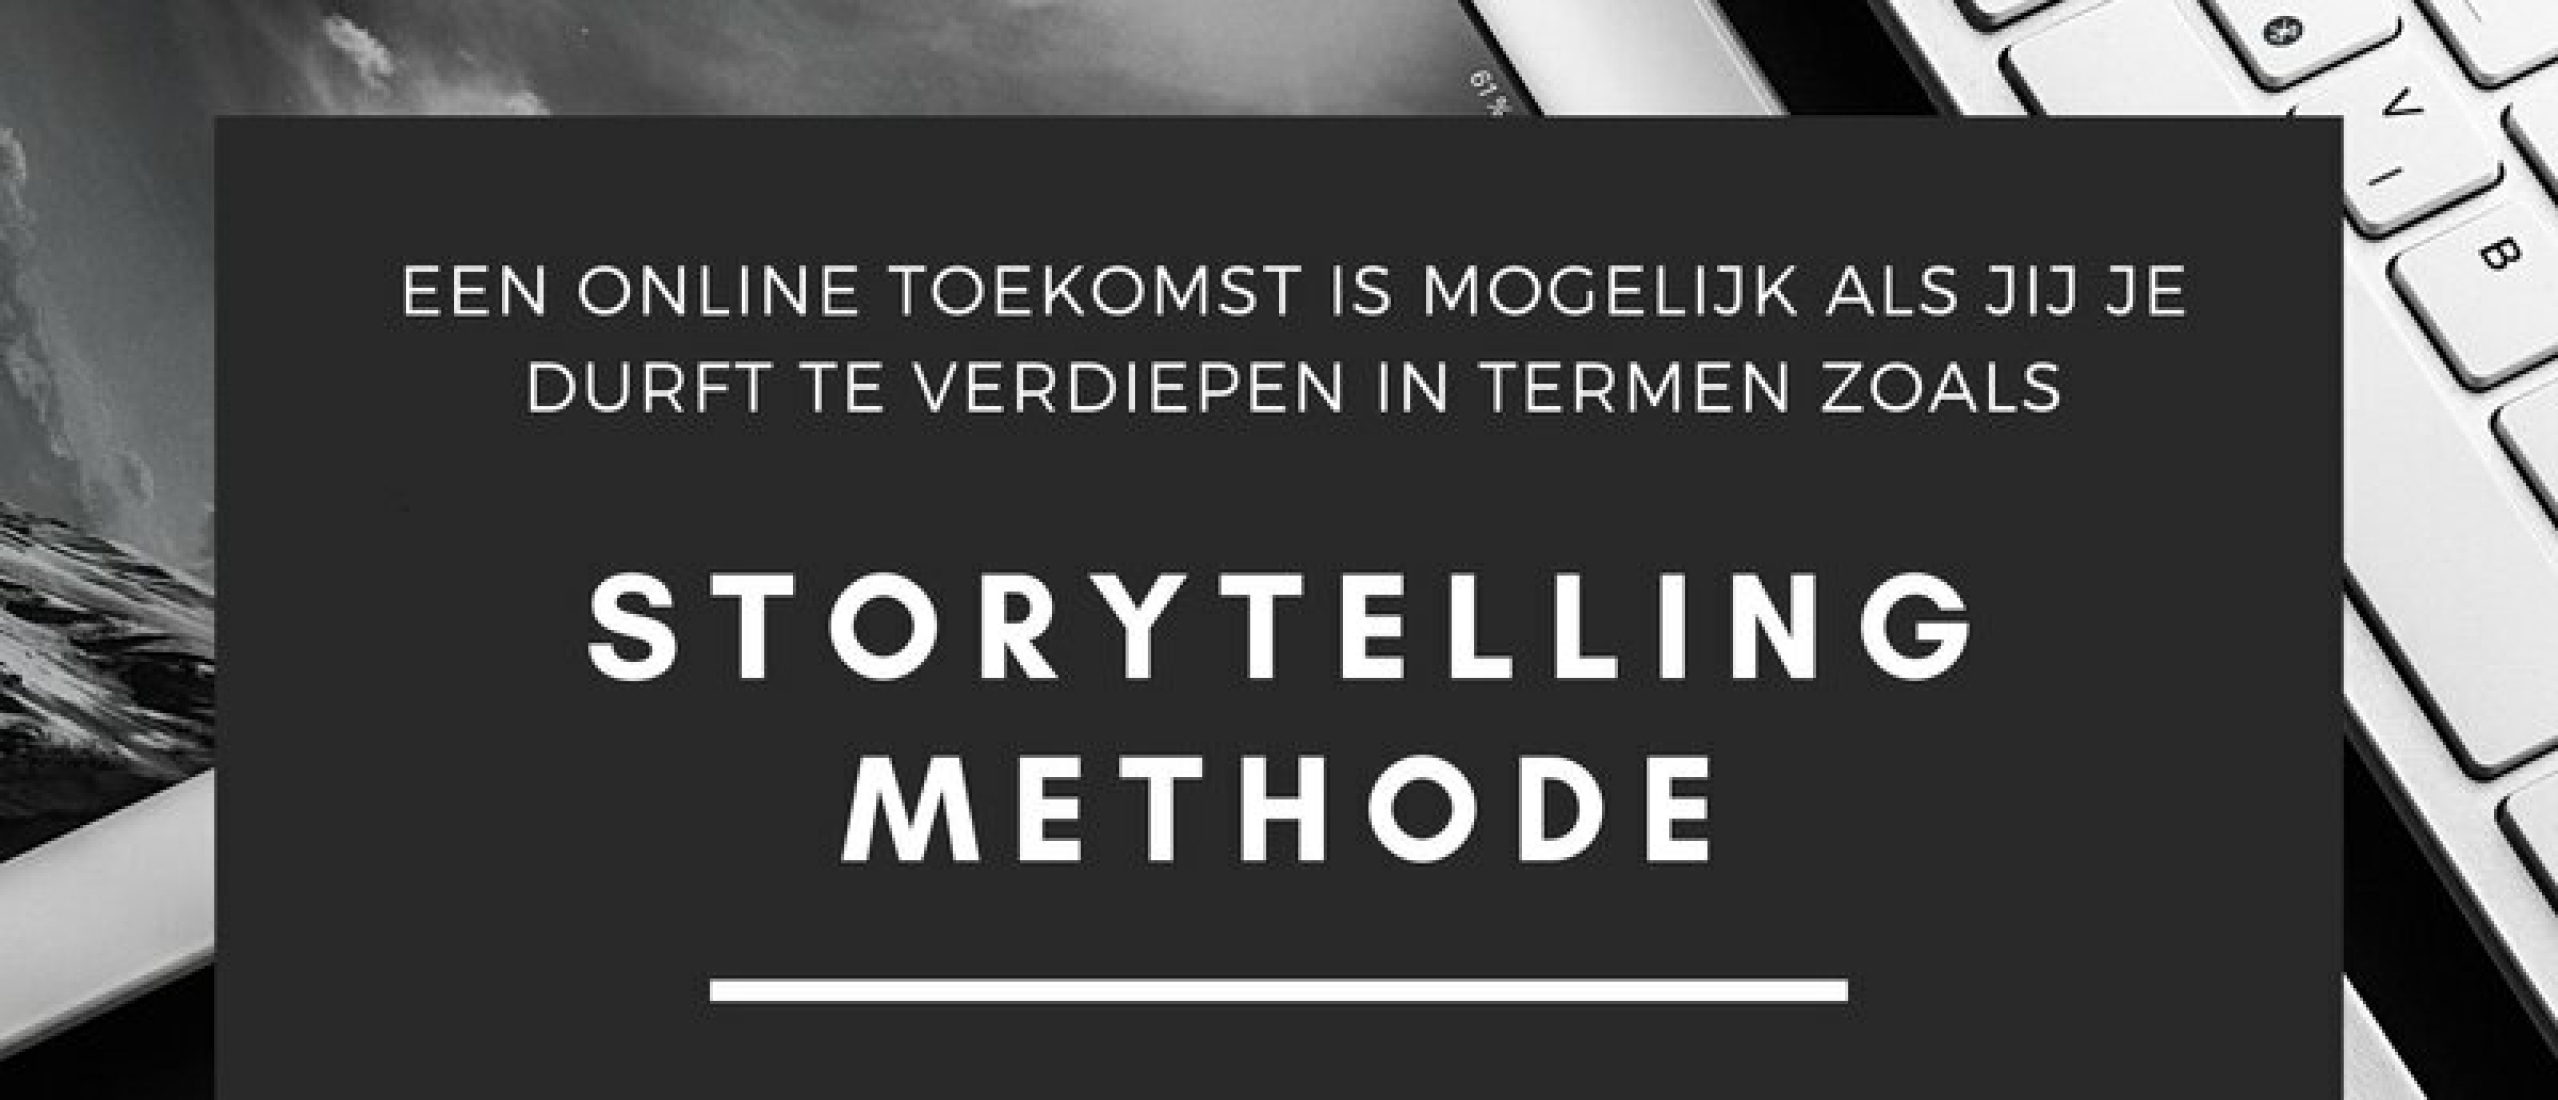 Storytelling Methode Online